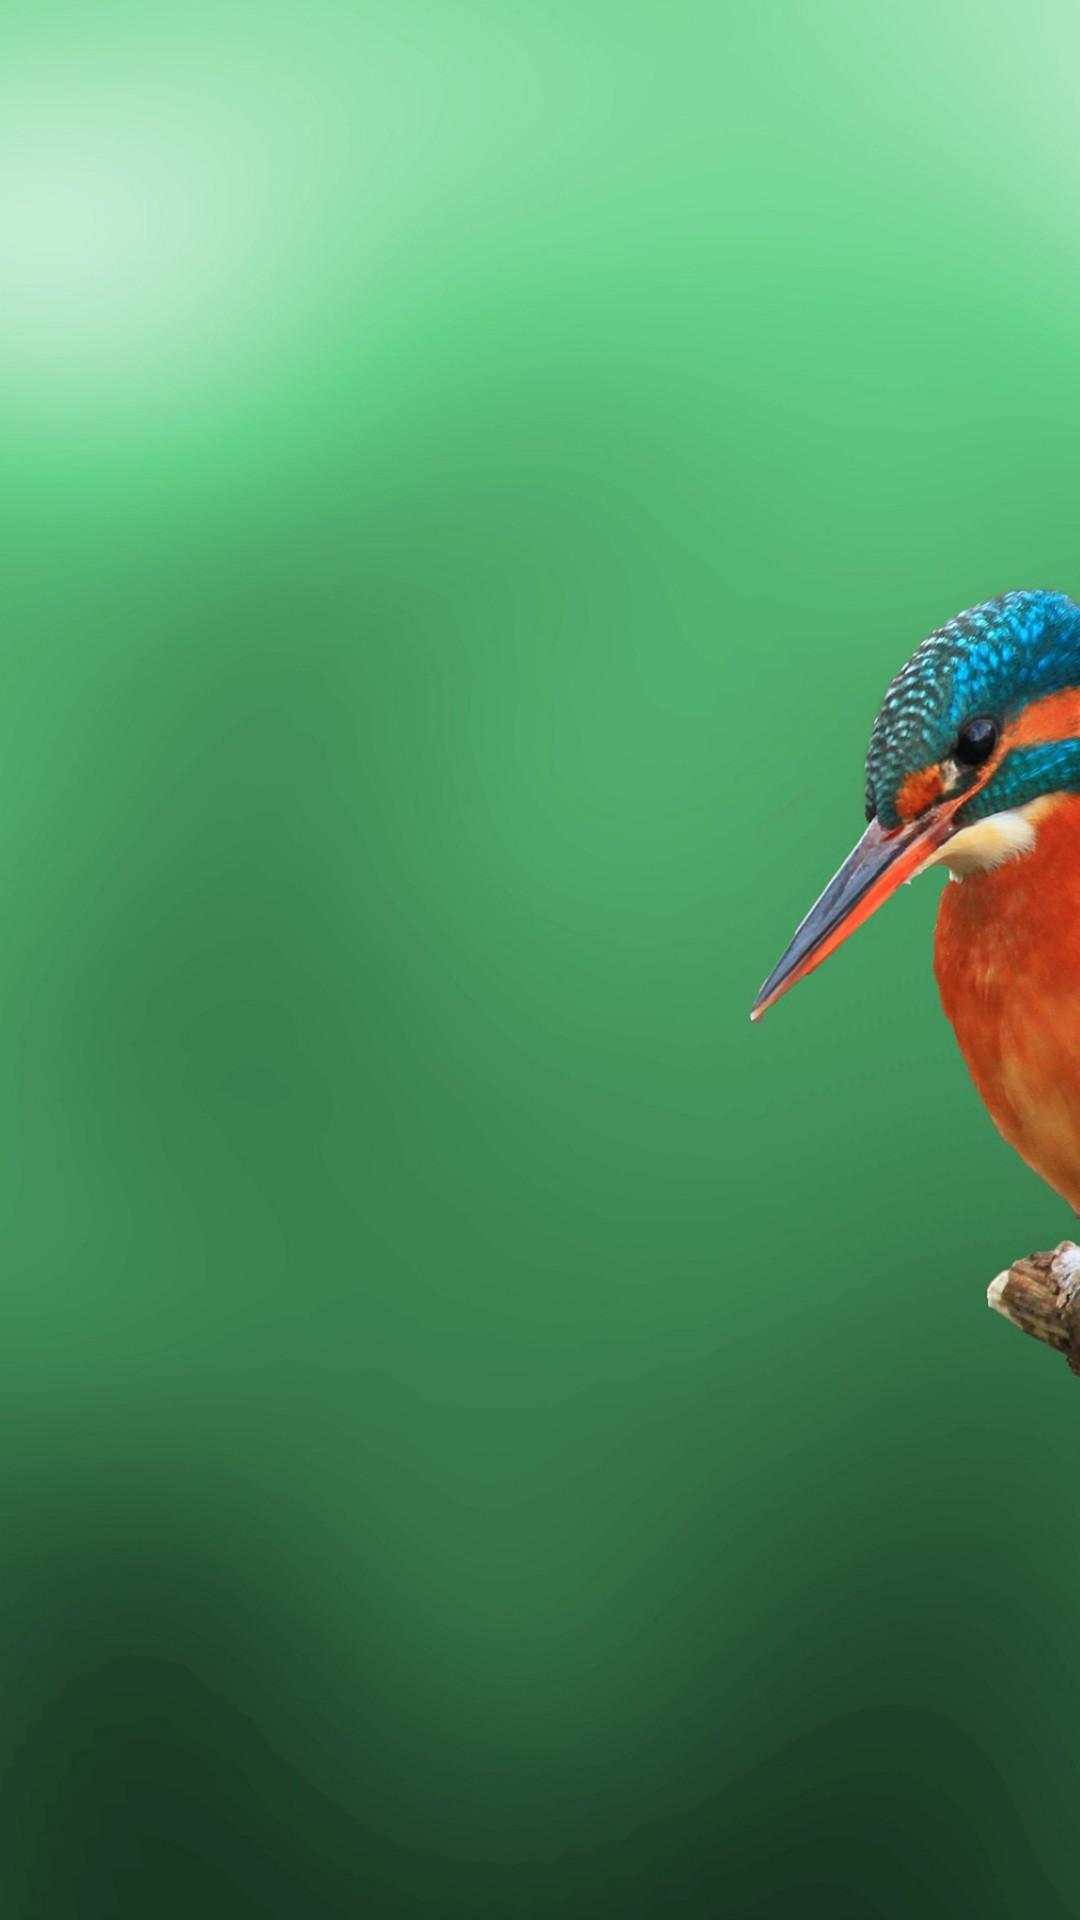 Kingfisher Bird 4K HD Wallpaper iPhone 6 / 6S Plus